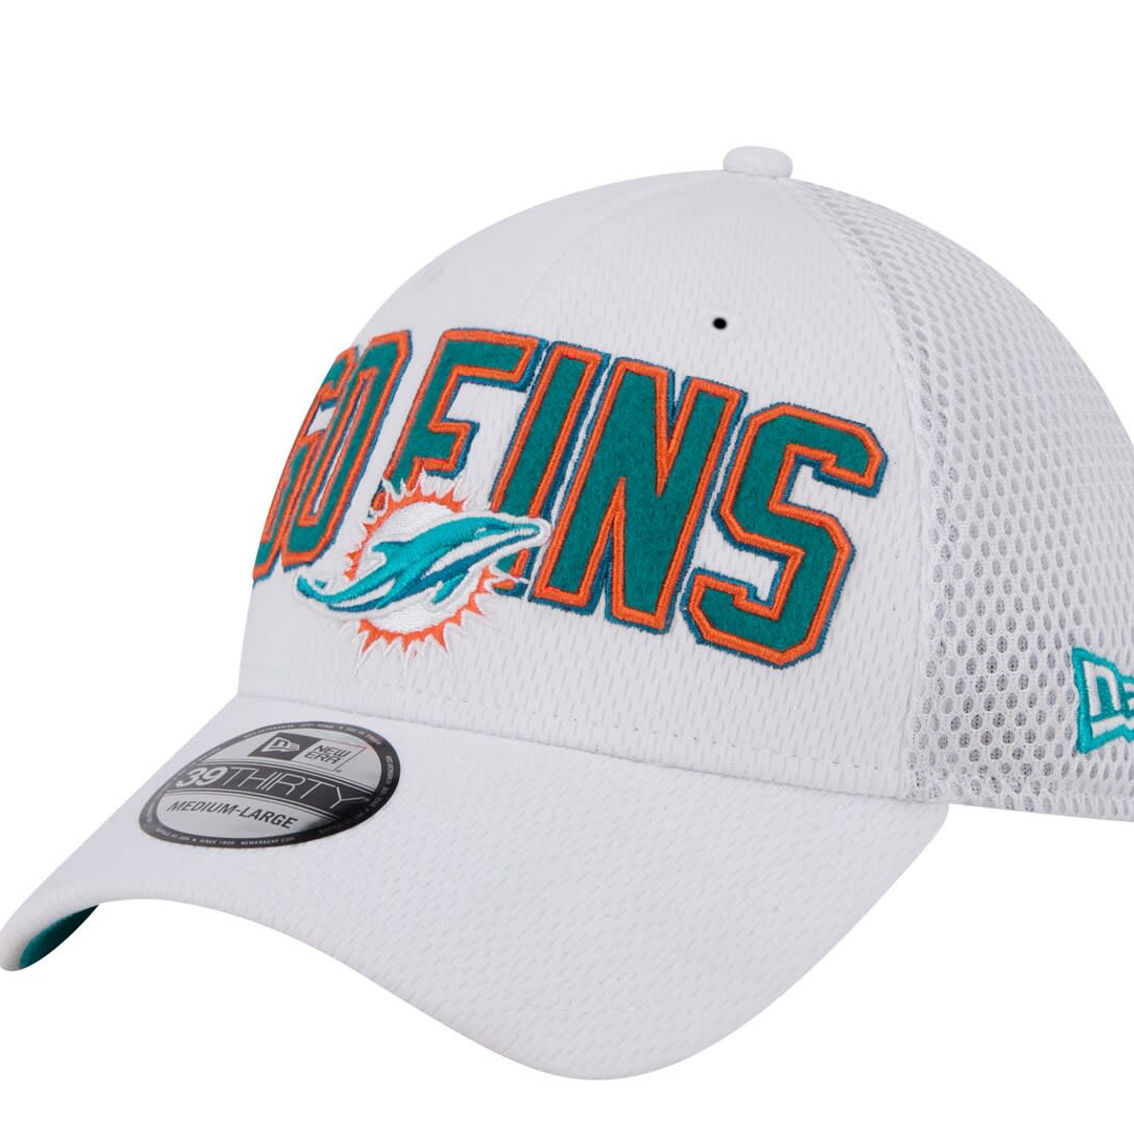 New Era Men's White Miami Dolphins Breakers 39THIRTY Flex Hat - Image 2 of 4